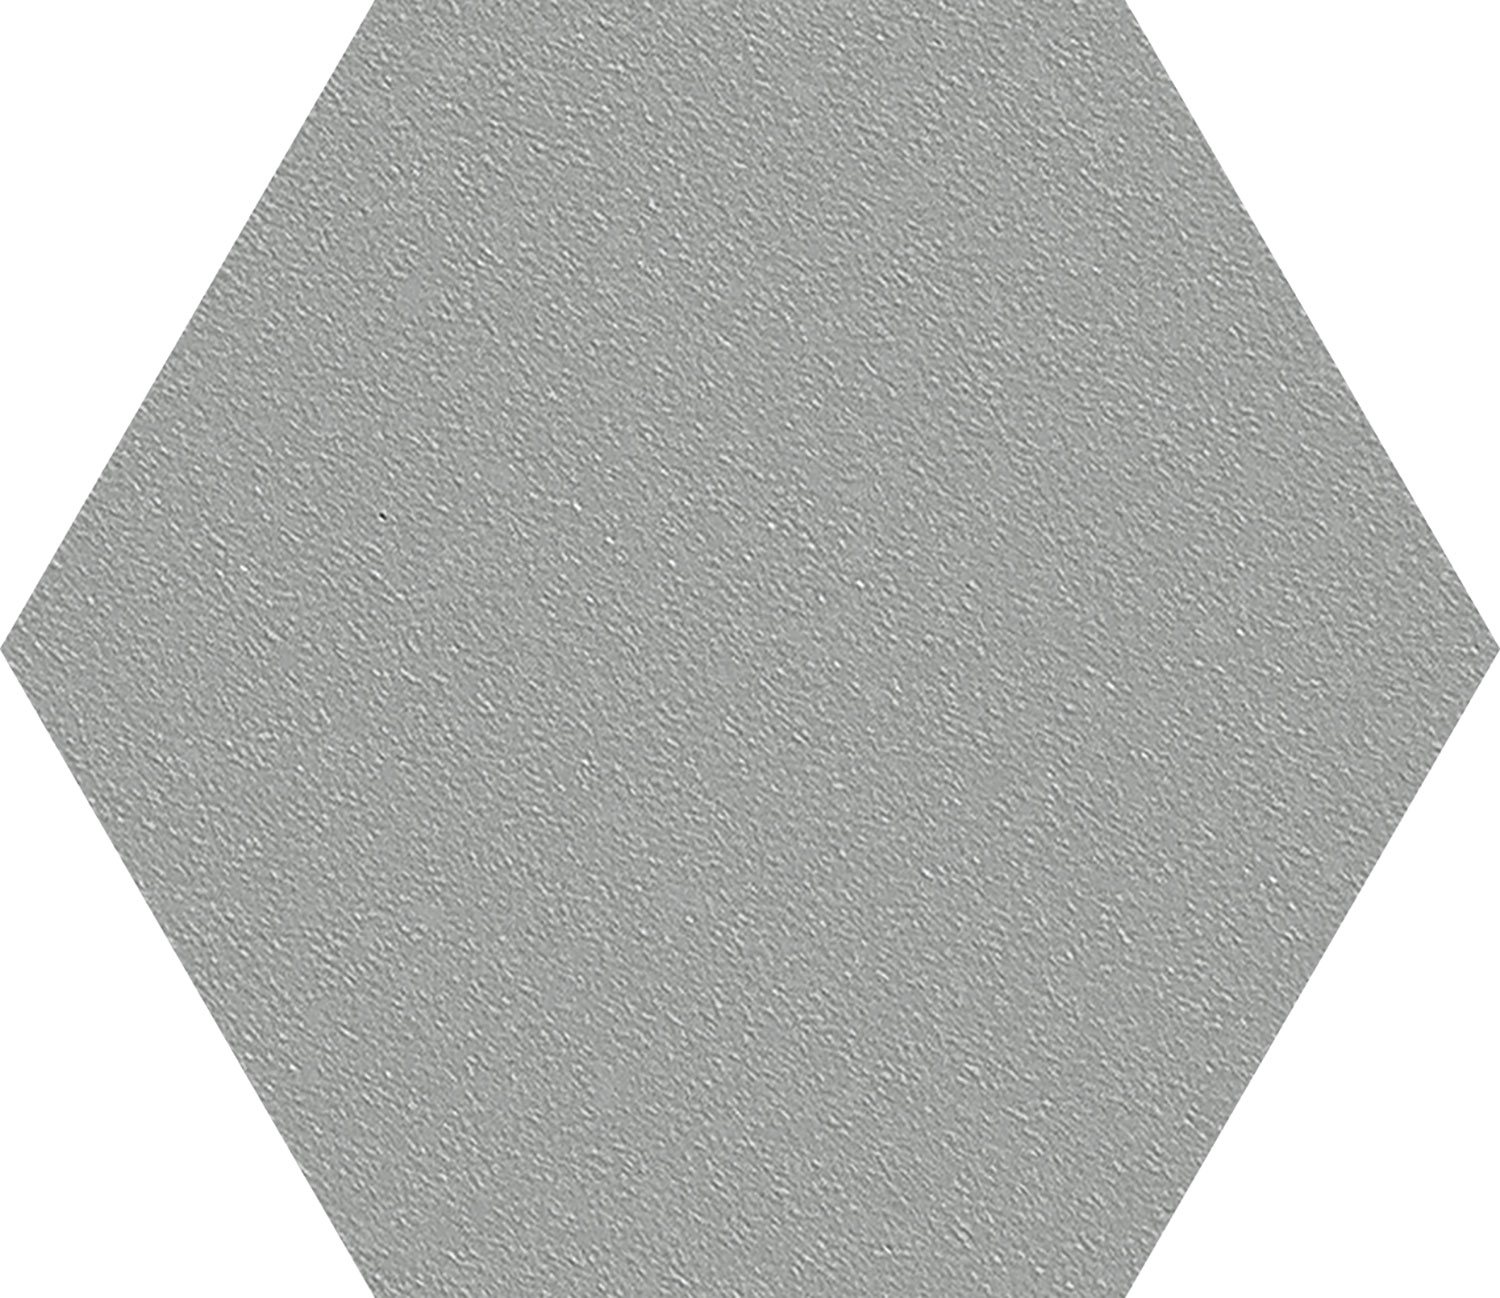 Satini grey hex